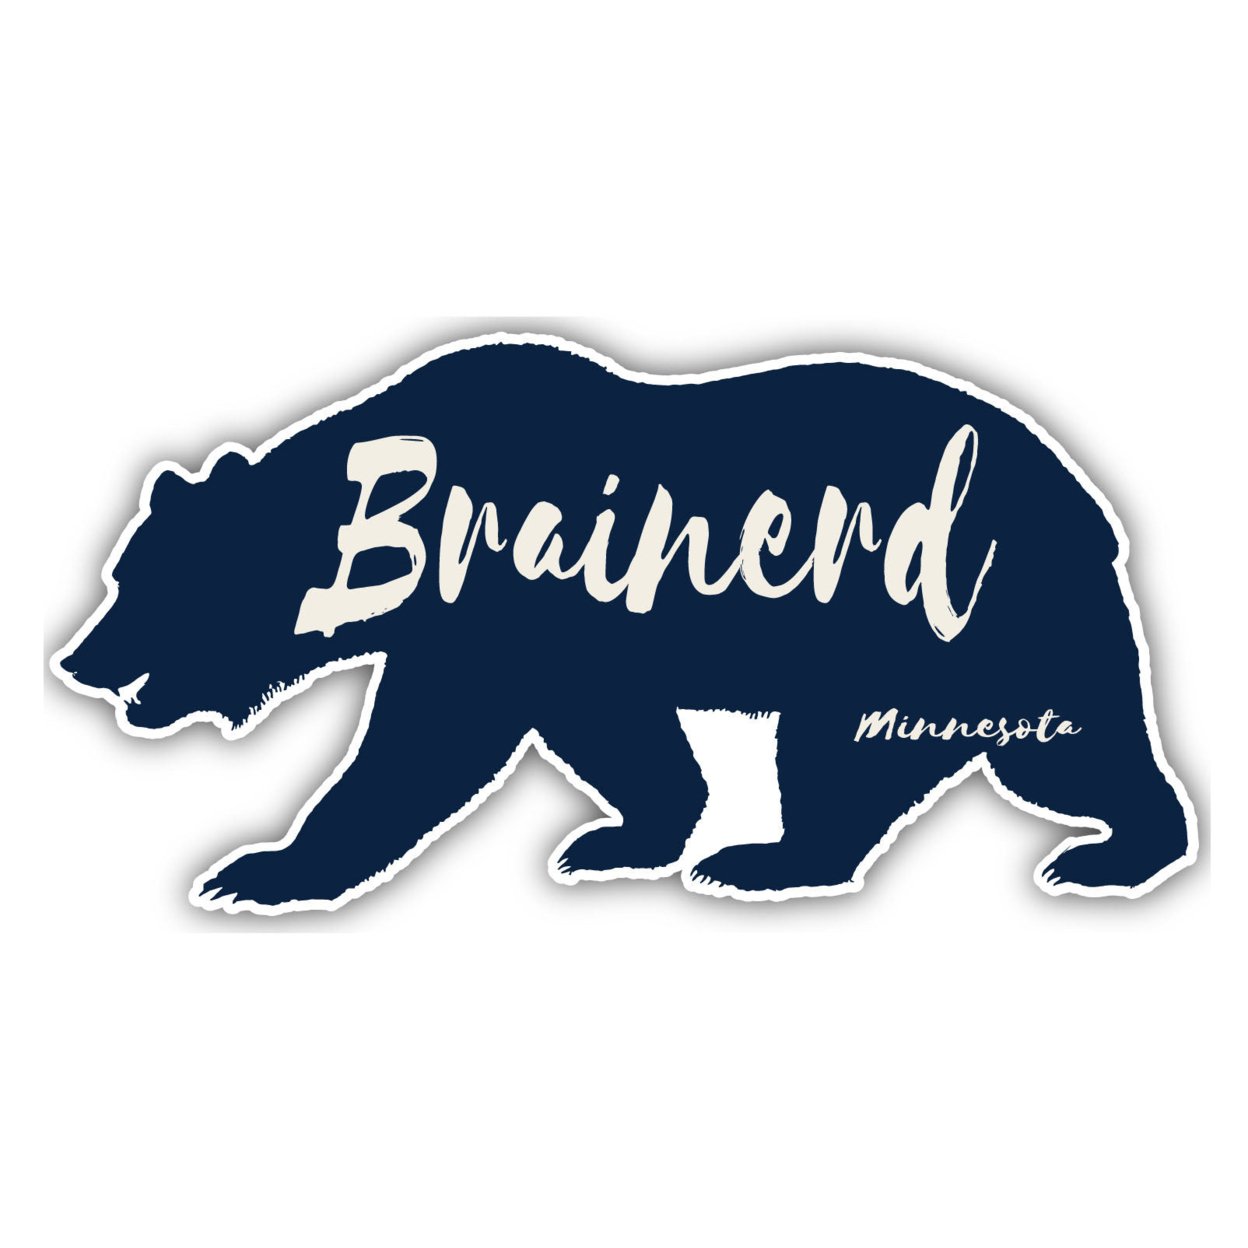 Brainerd Minnesota Souvenir Decorative Stickers (Choose Theme And Size) - 4-Pack, 10-Inch, Camp Life